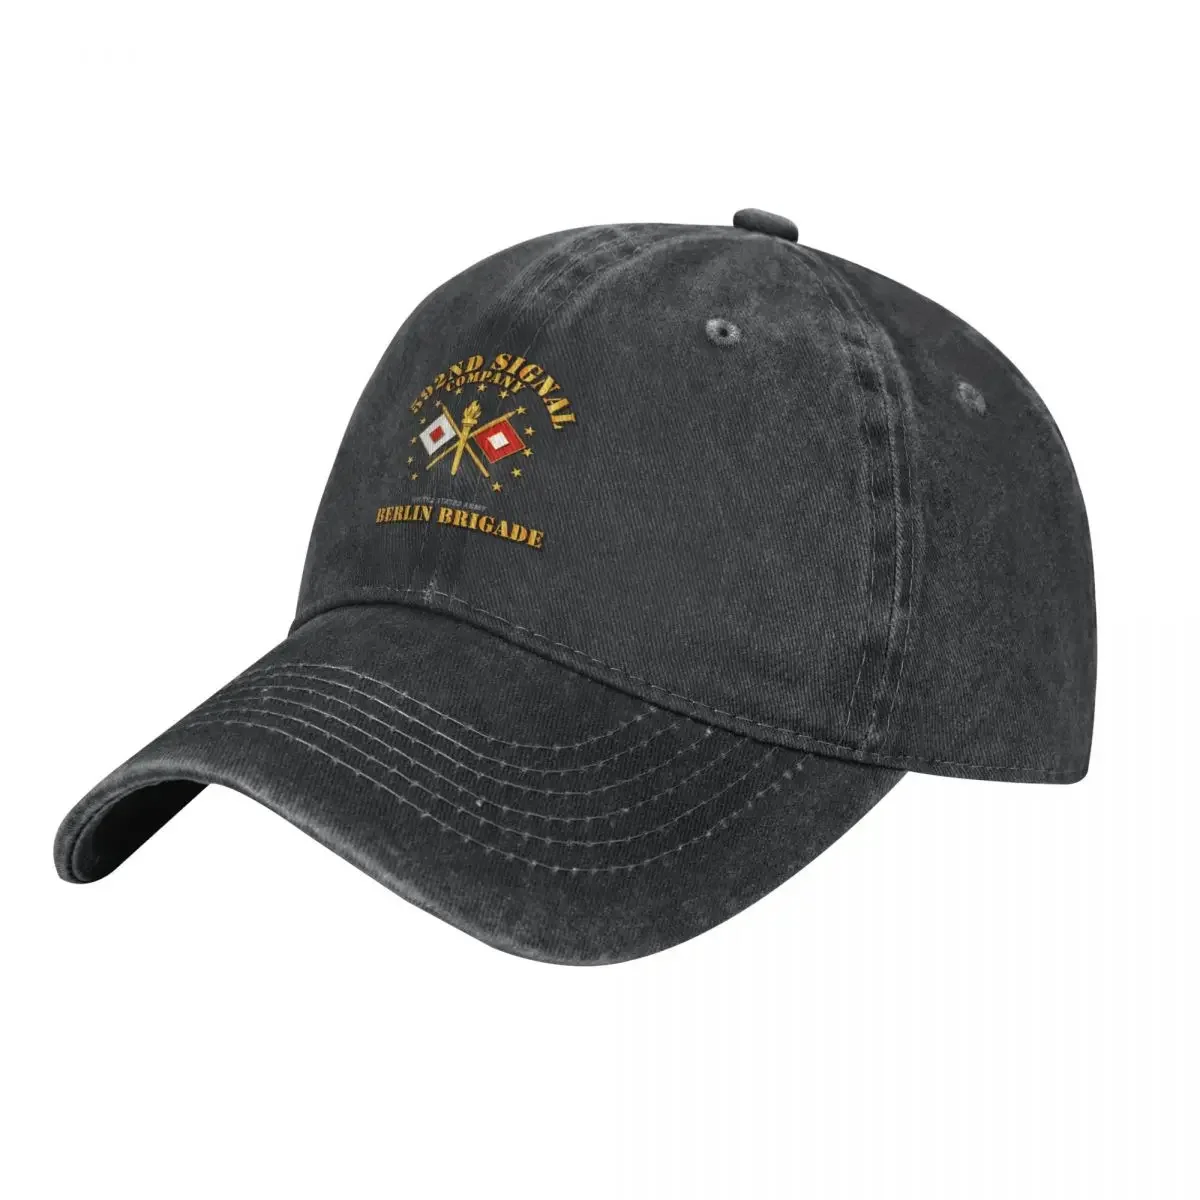 

Army - 592d Signal Company - Berlin Brigade Cowboy Hat Beach Golf Wear Caps For Women Men's